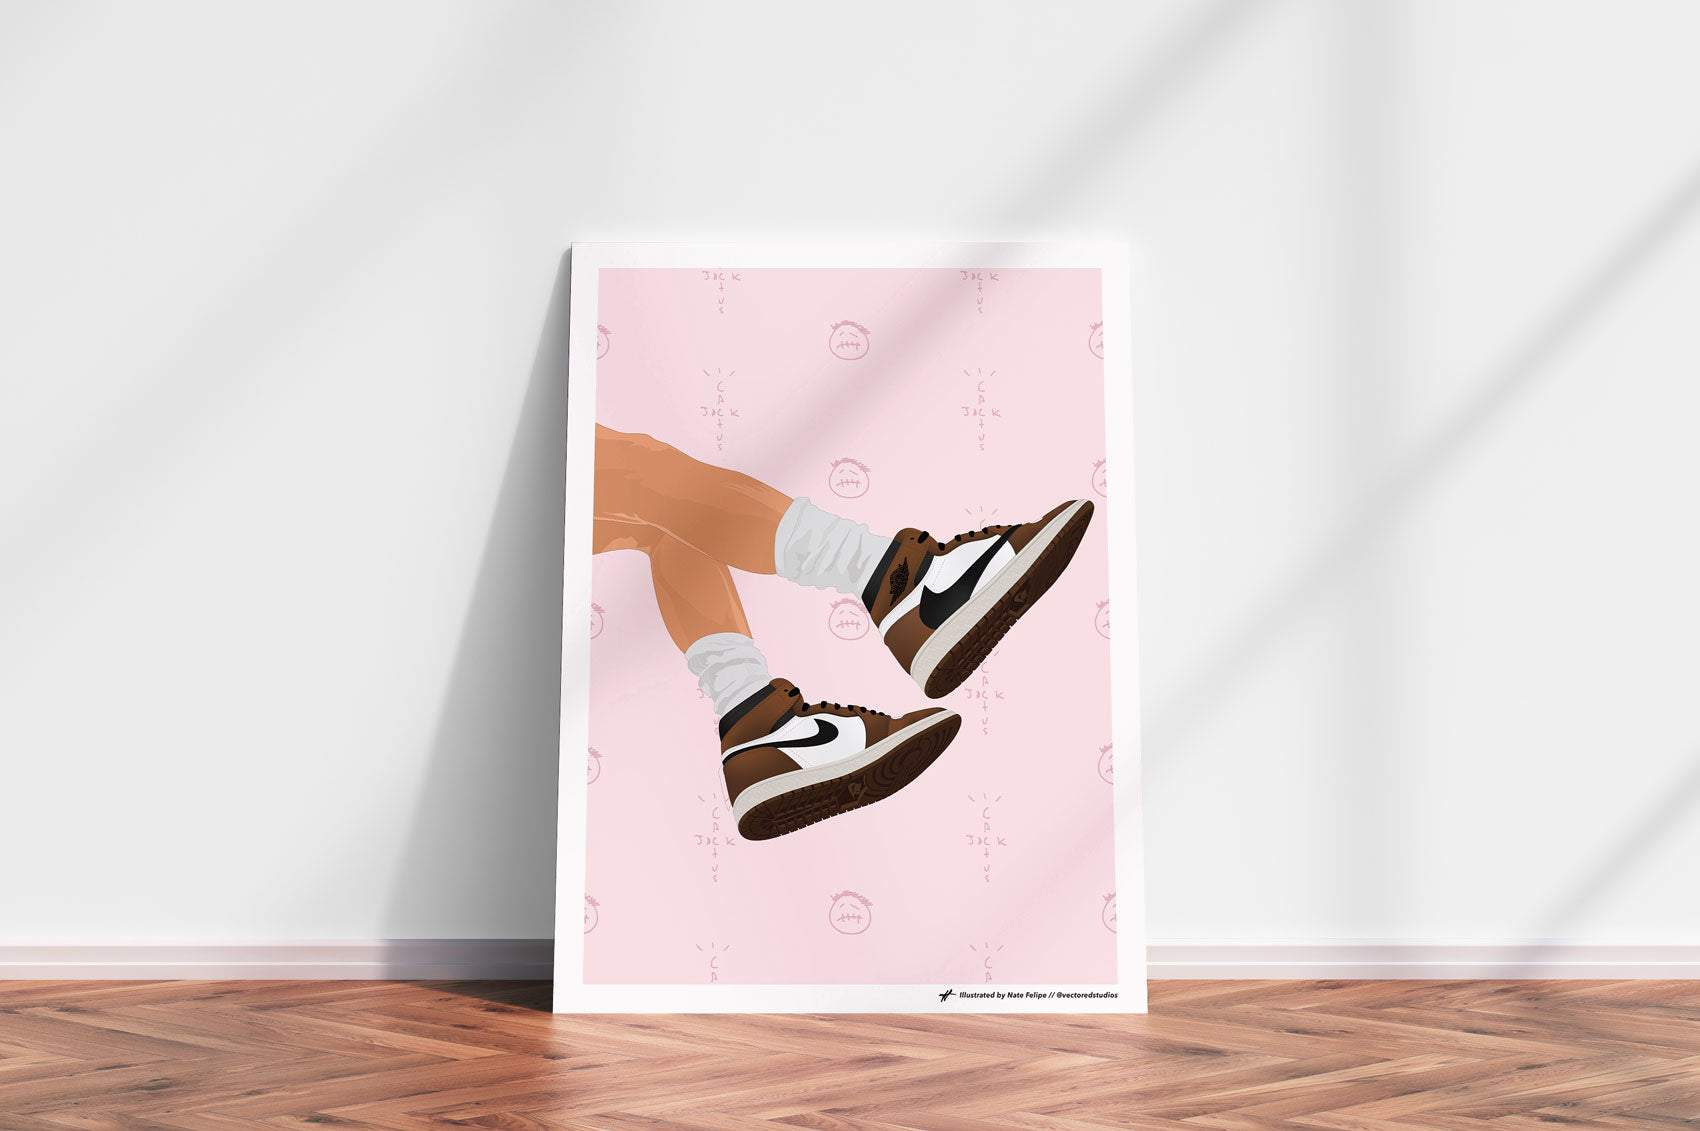 Highest In The Room - Travis Scott x Air Jordan 1 Poster